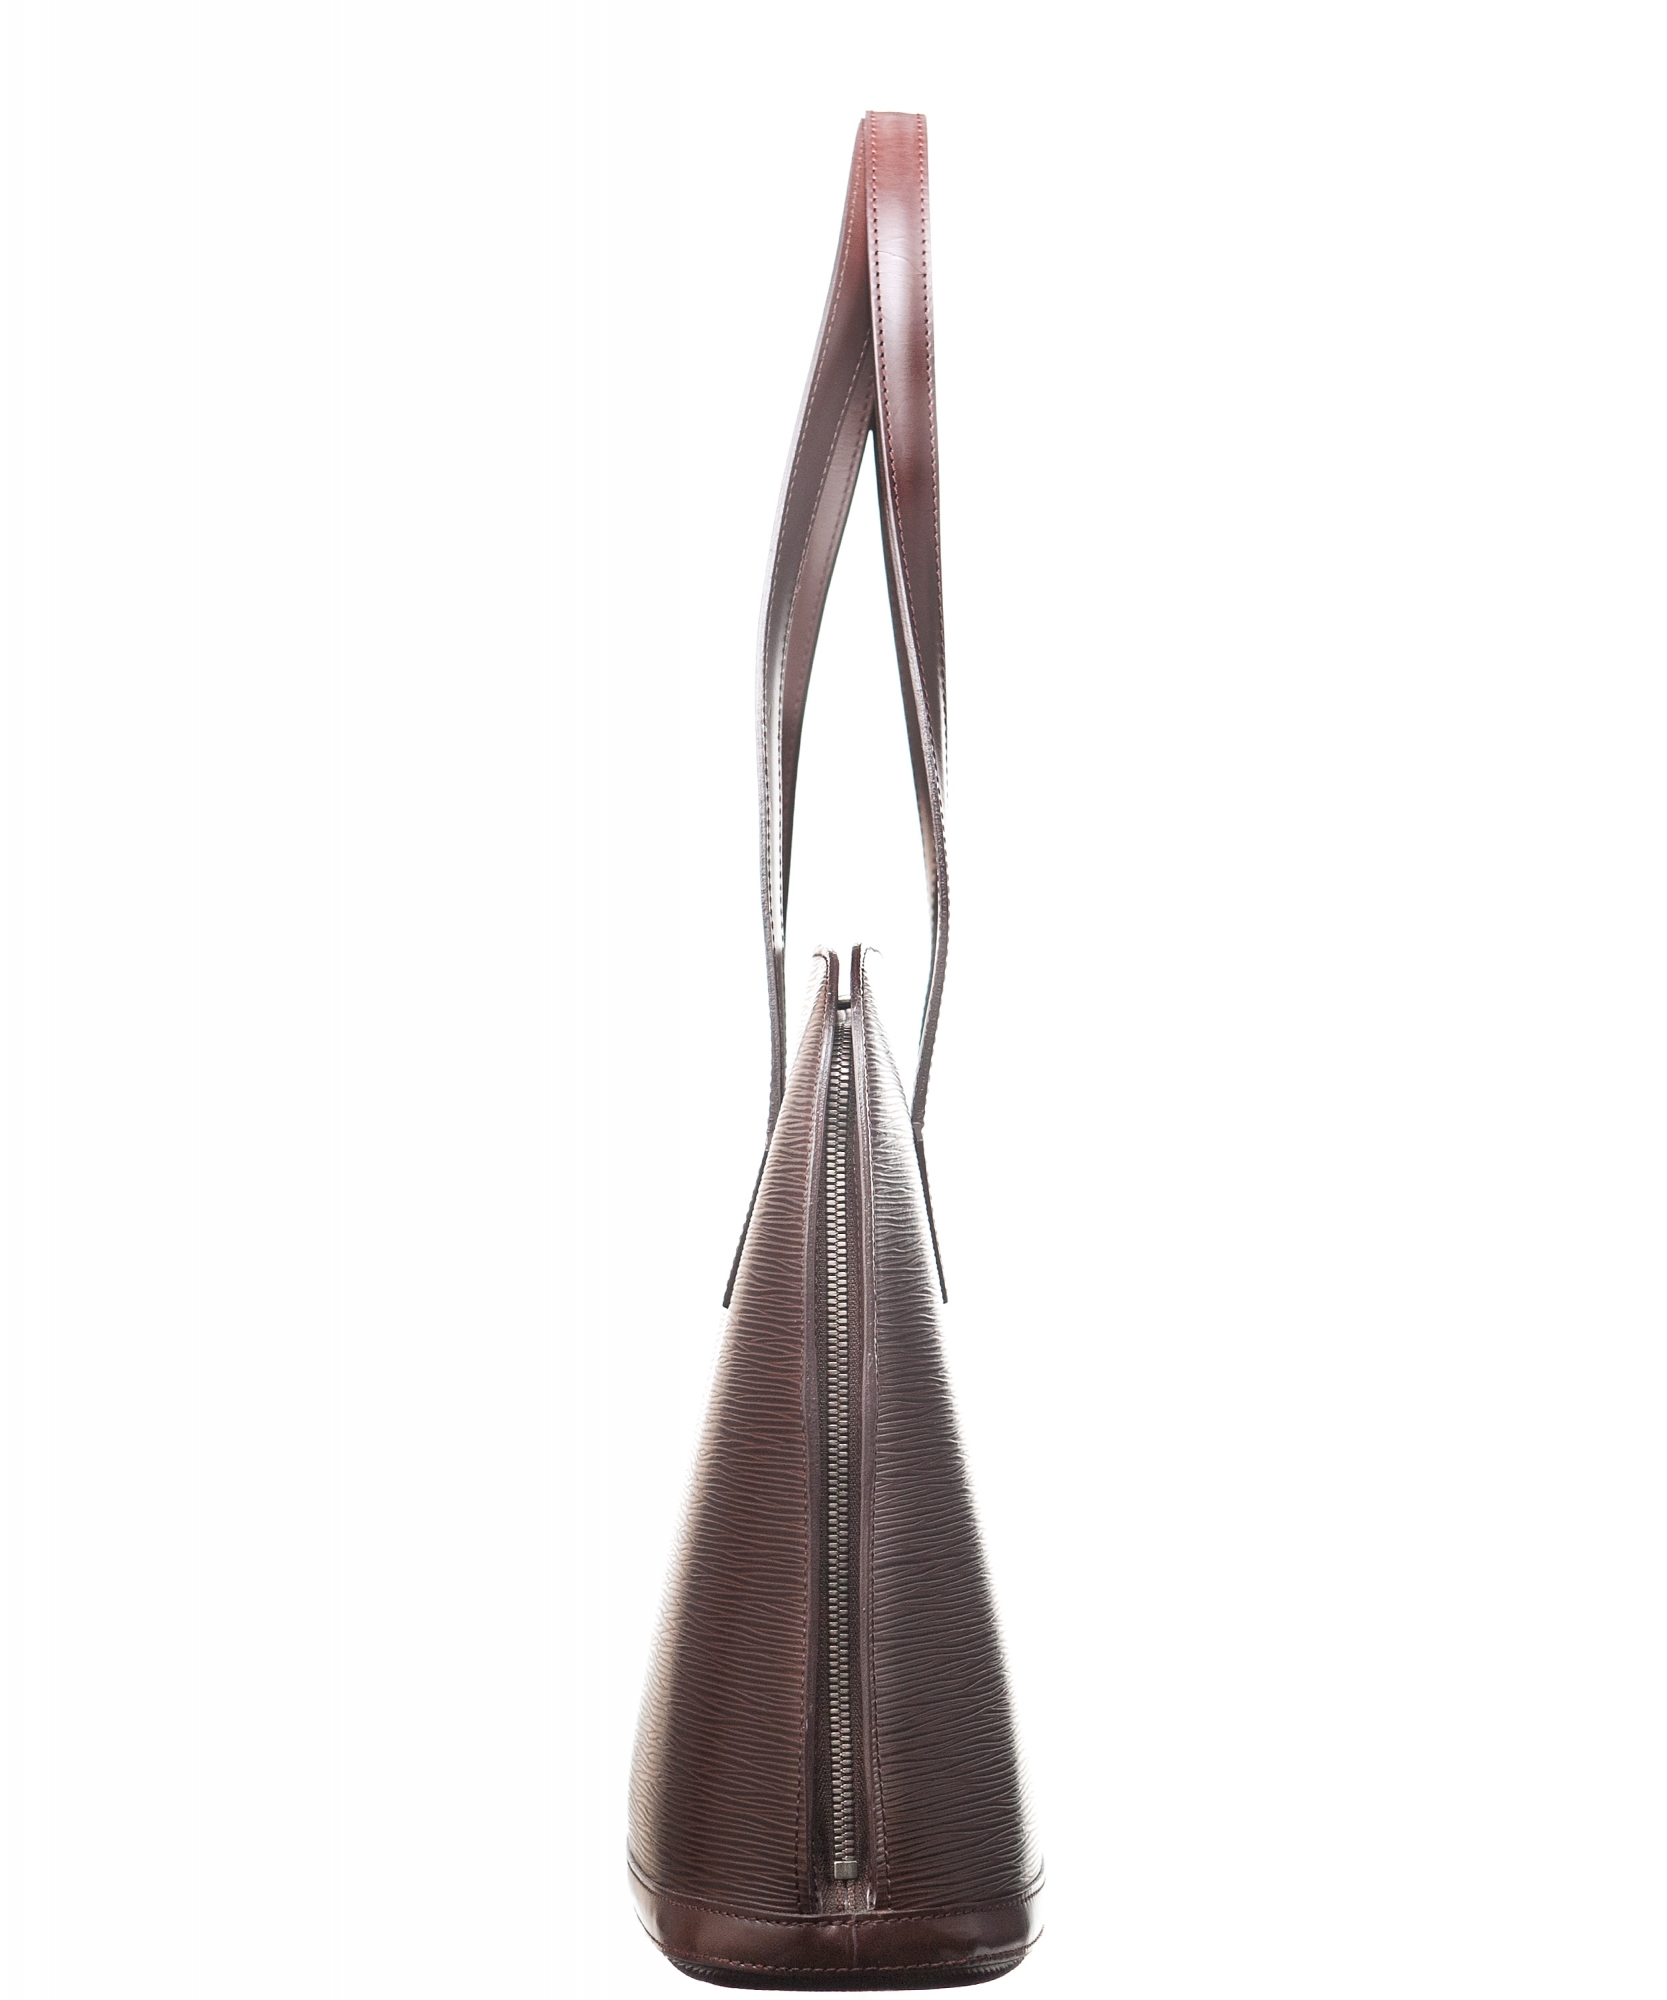 Louis Vuitton Pepper Epi Leather Lussac Tote Bag.  Luxury, Lot #56669